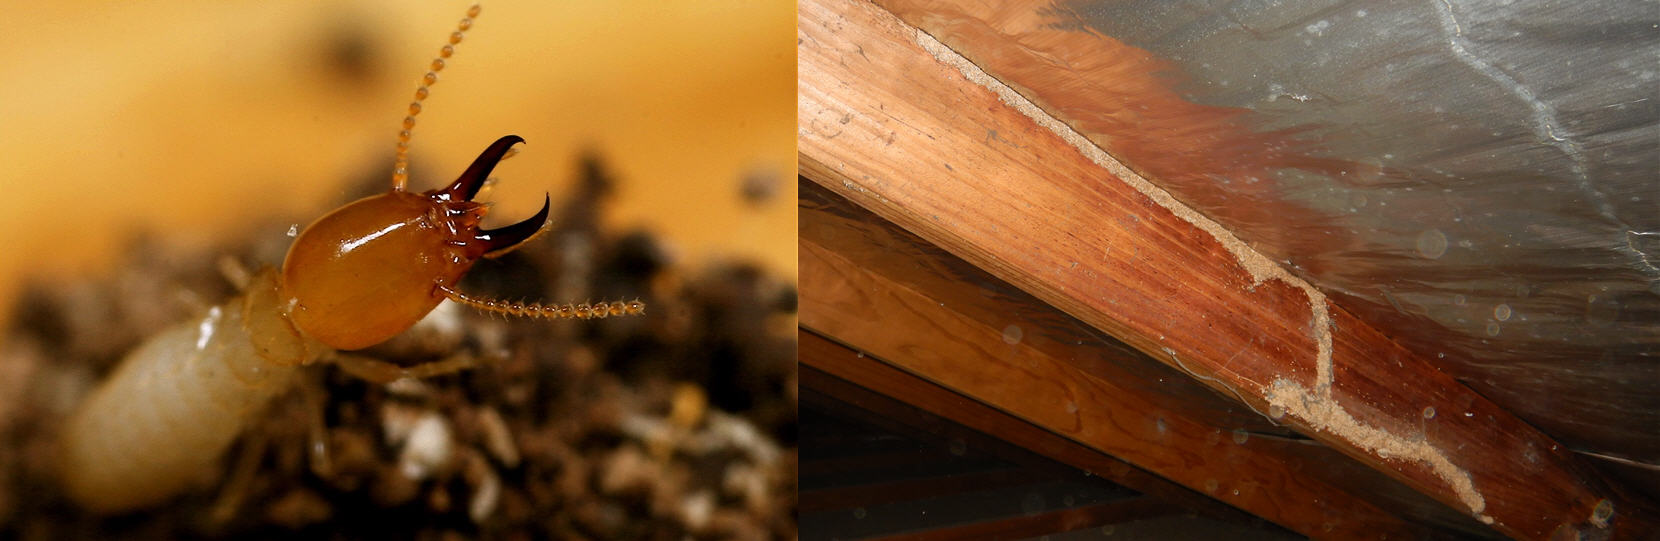 Termite pest control sydney- banner 1